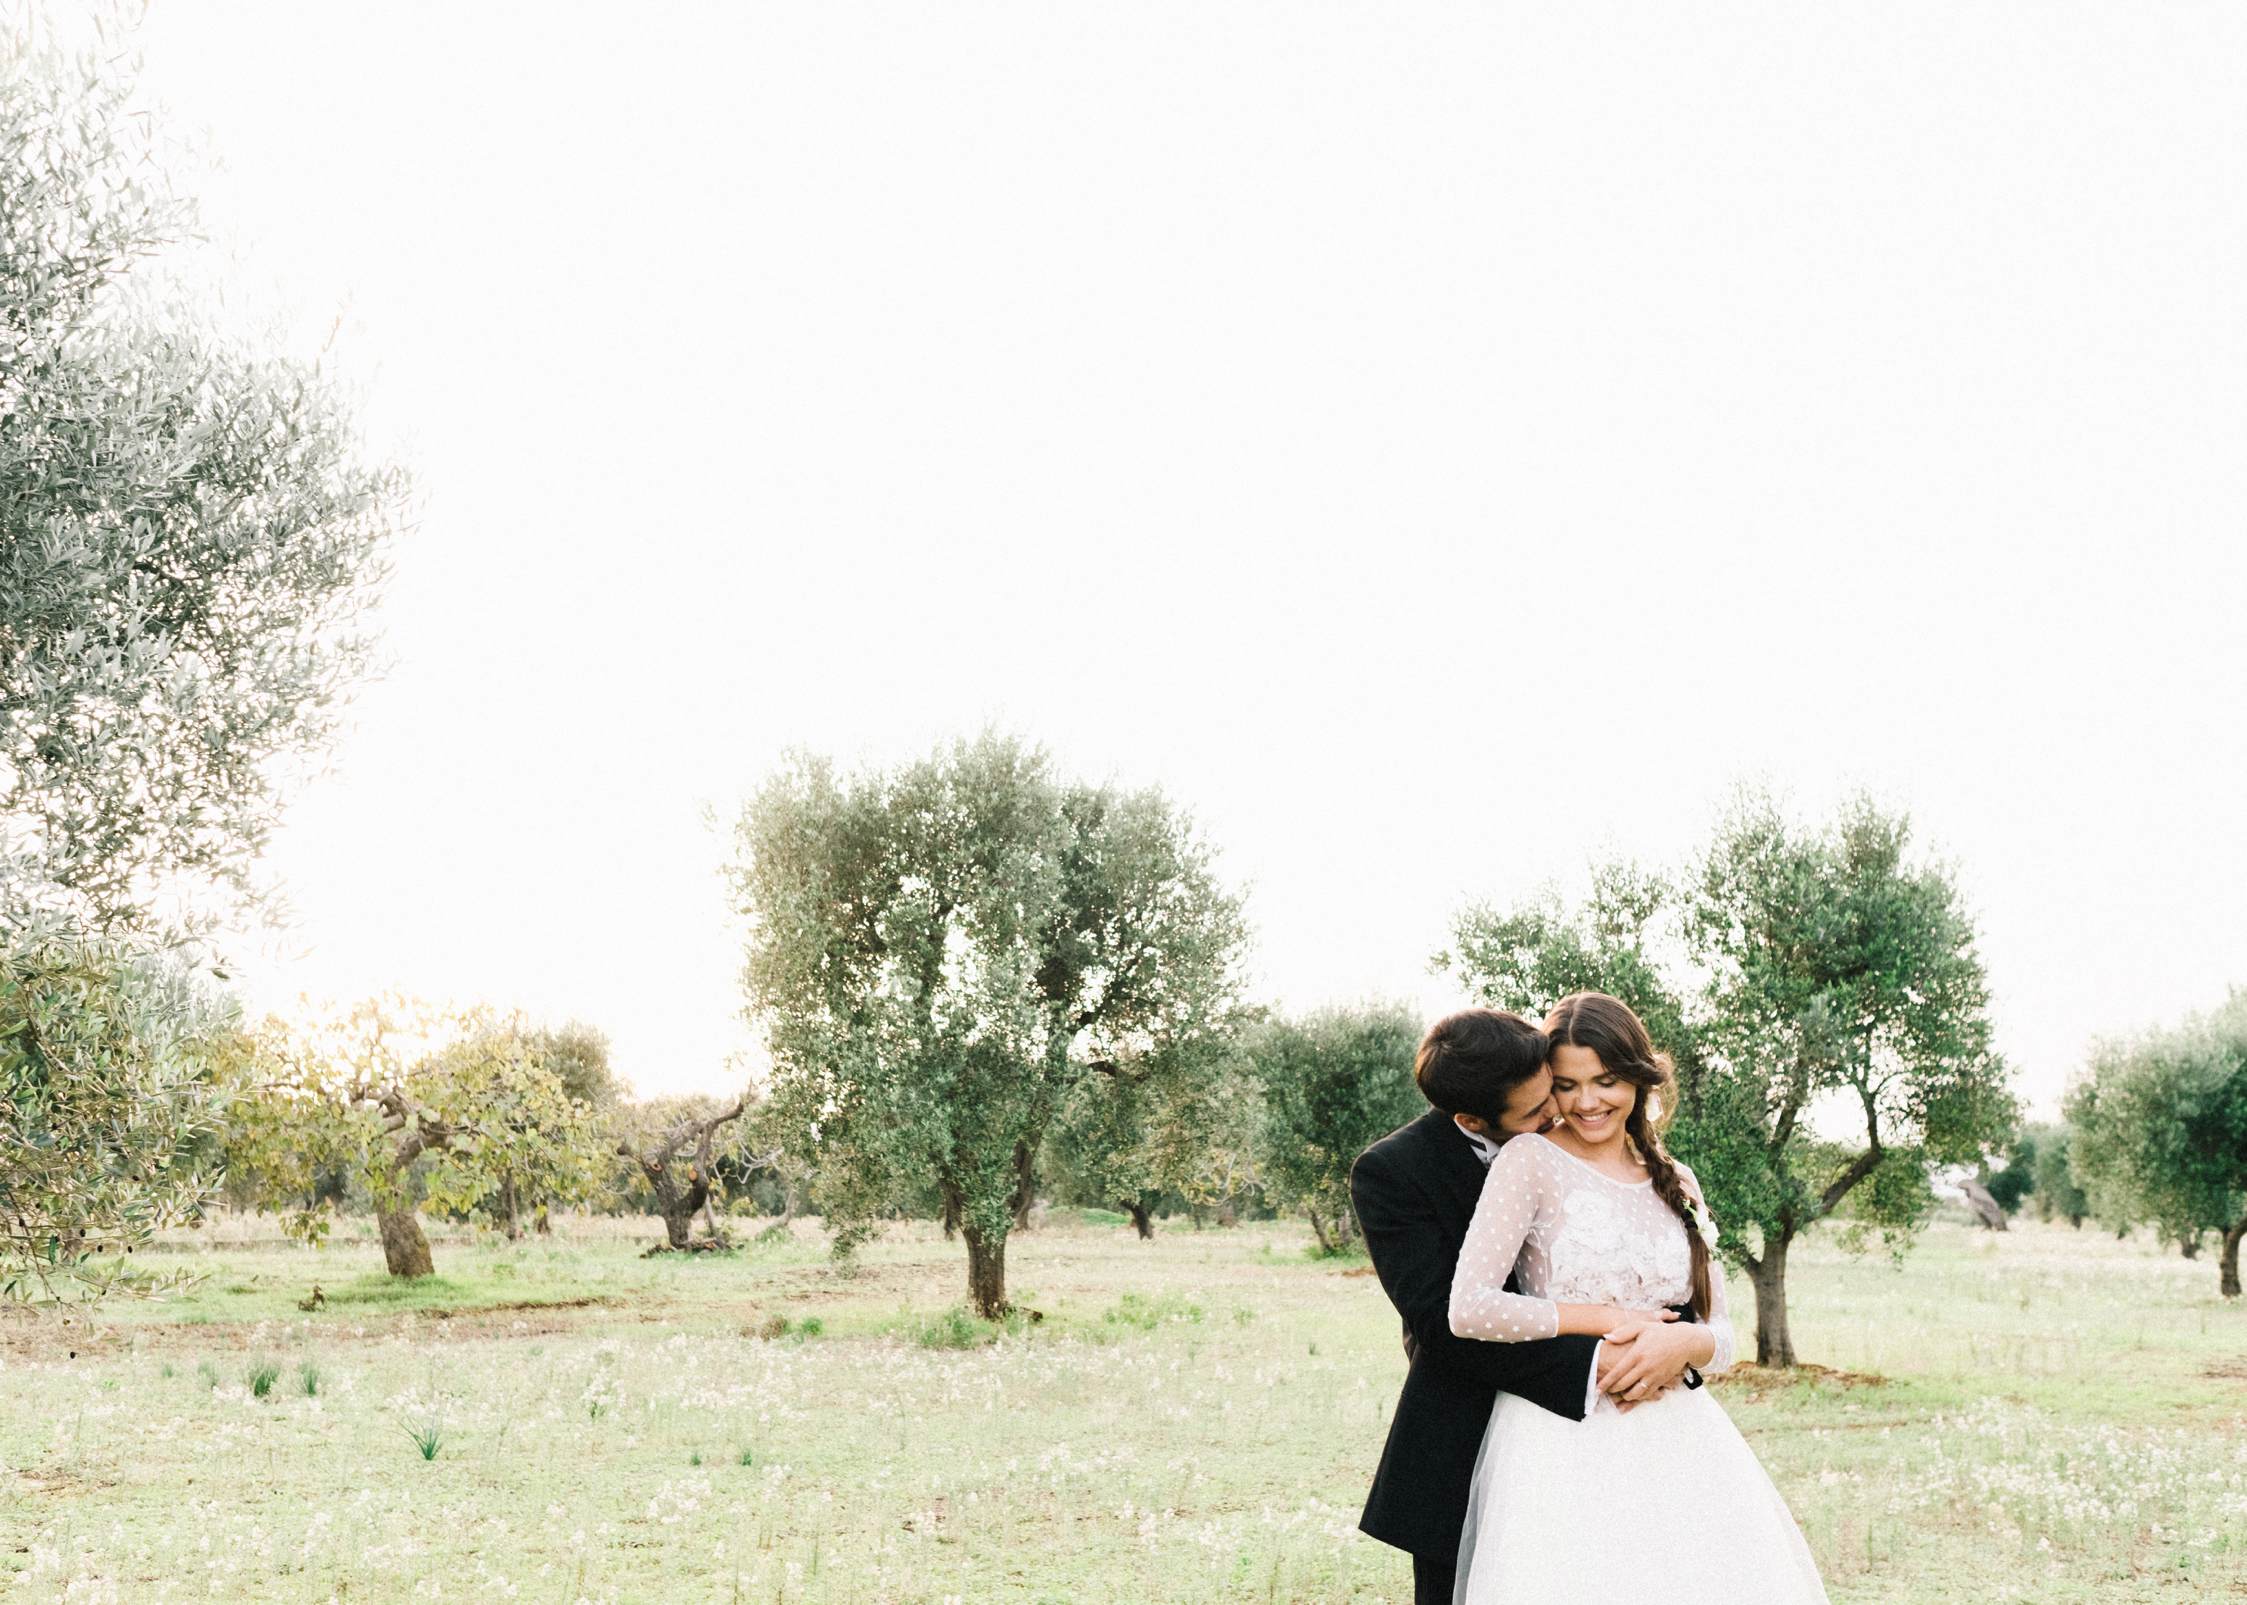 Wedding photography Puglia Italy - Romantic couple shoot